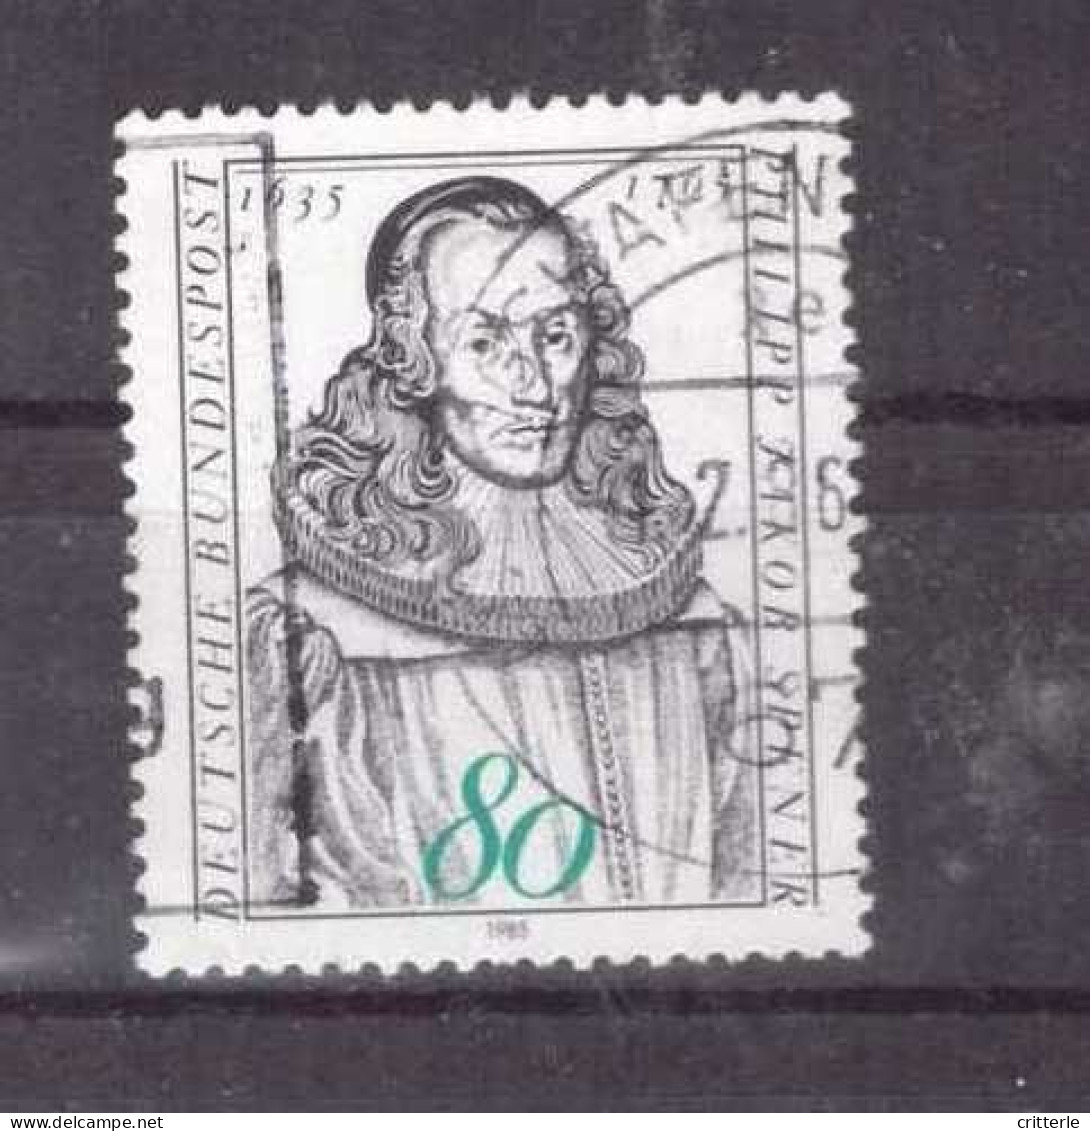 BRD Michel Nr. 1235 Gestempelt (5,6,7,8,9) - Used Stamps